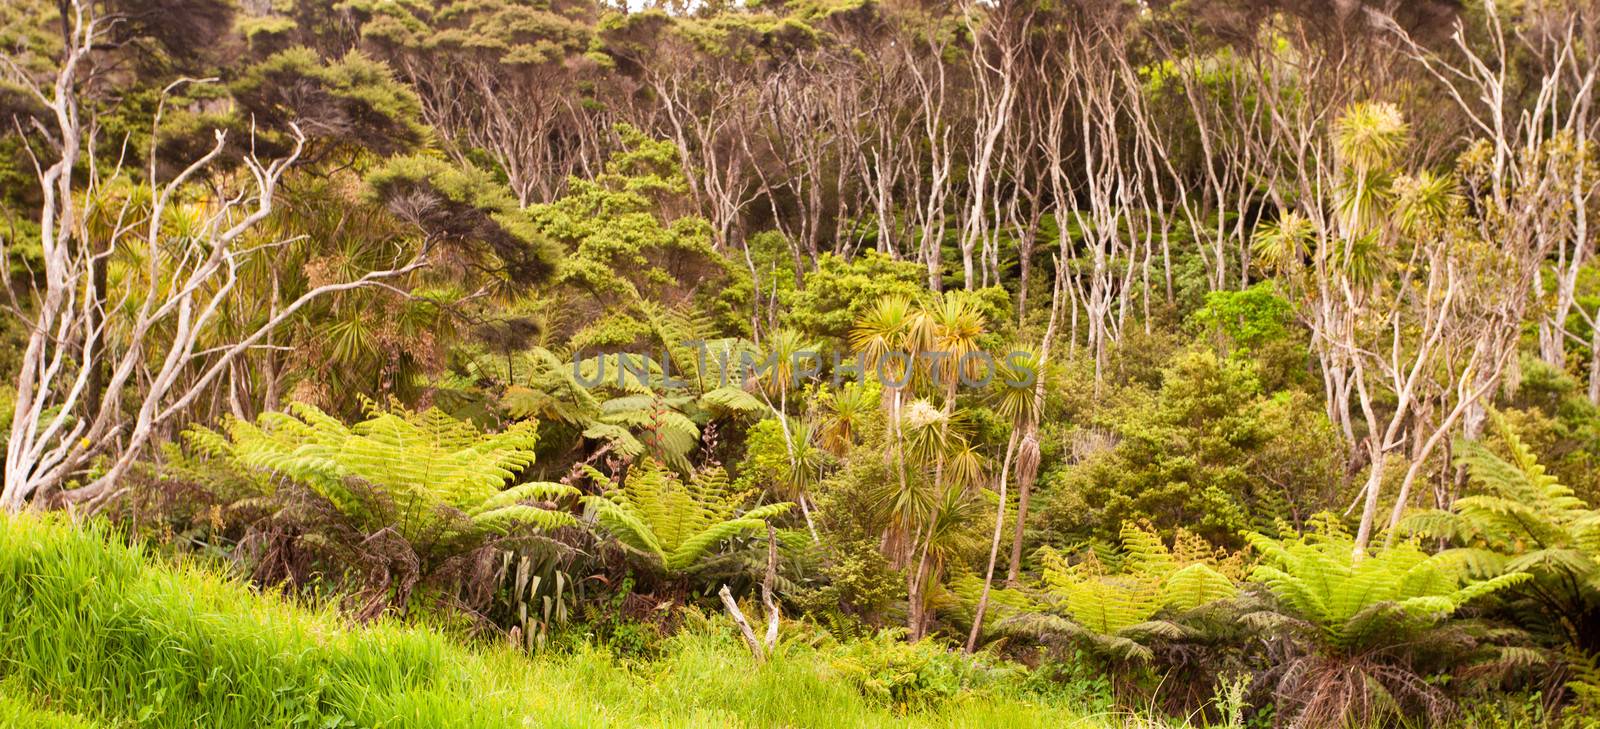 New Zealand North Island forest vegetation of fern trees and a canopy manuka new zealand teatrees Leptospermum scoparium